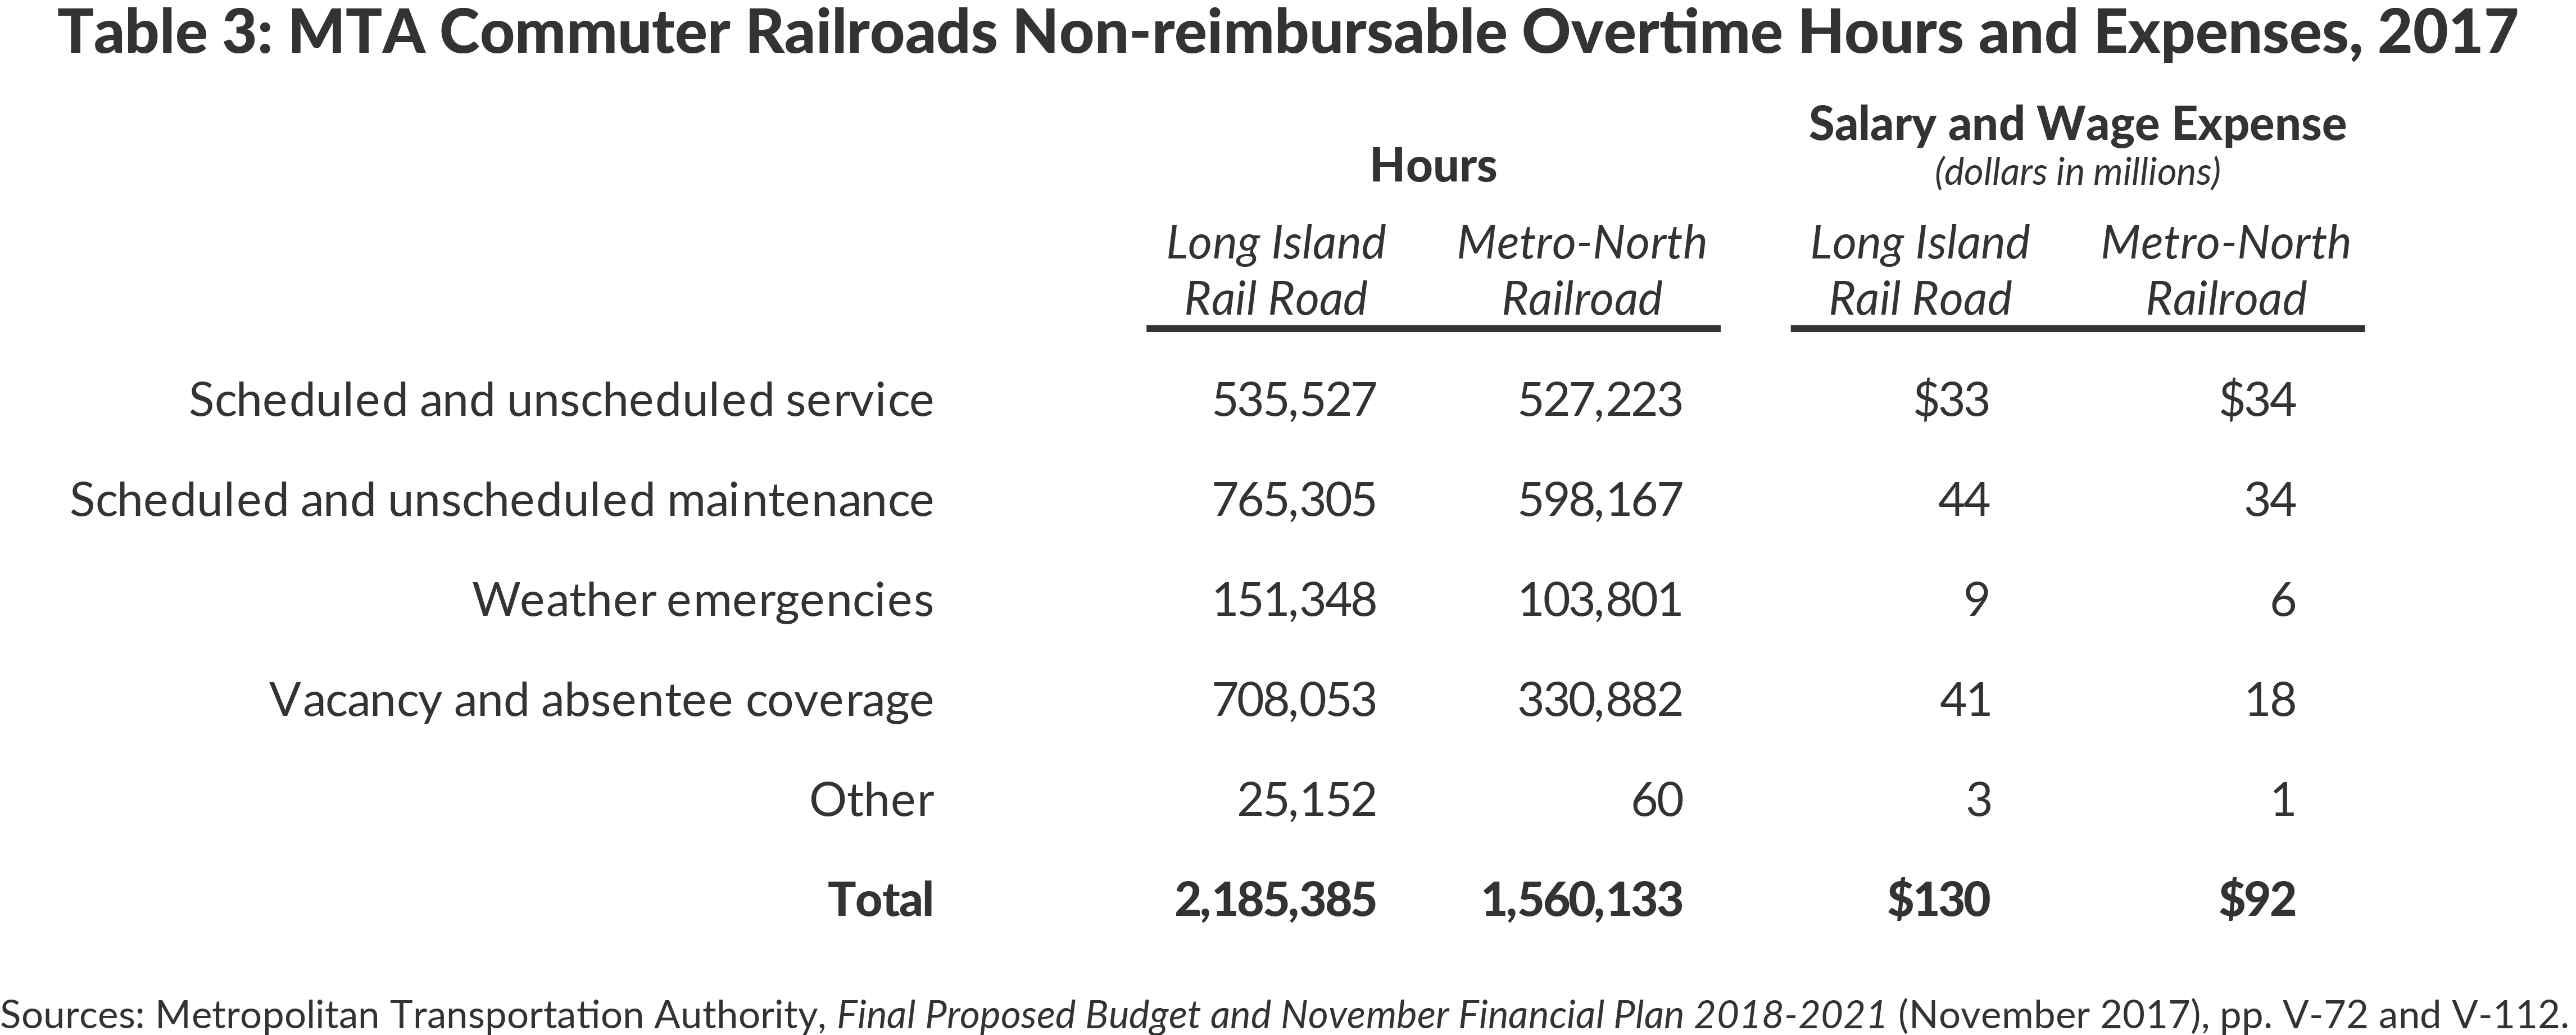 Table 3: MTA Commuter Railroads Non-reimbursable Overtime Hours and Expenses, 2017